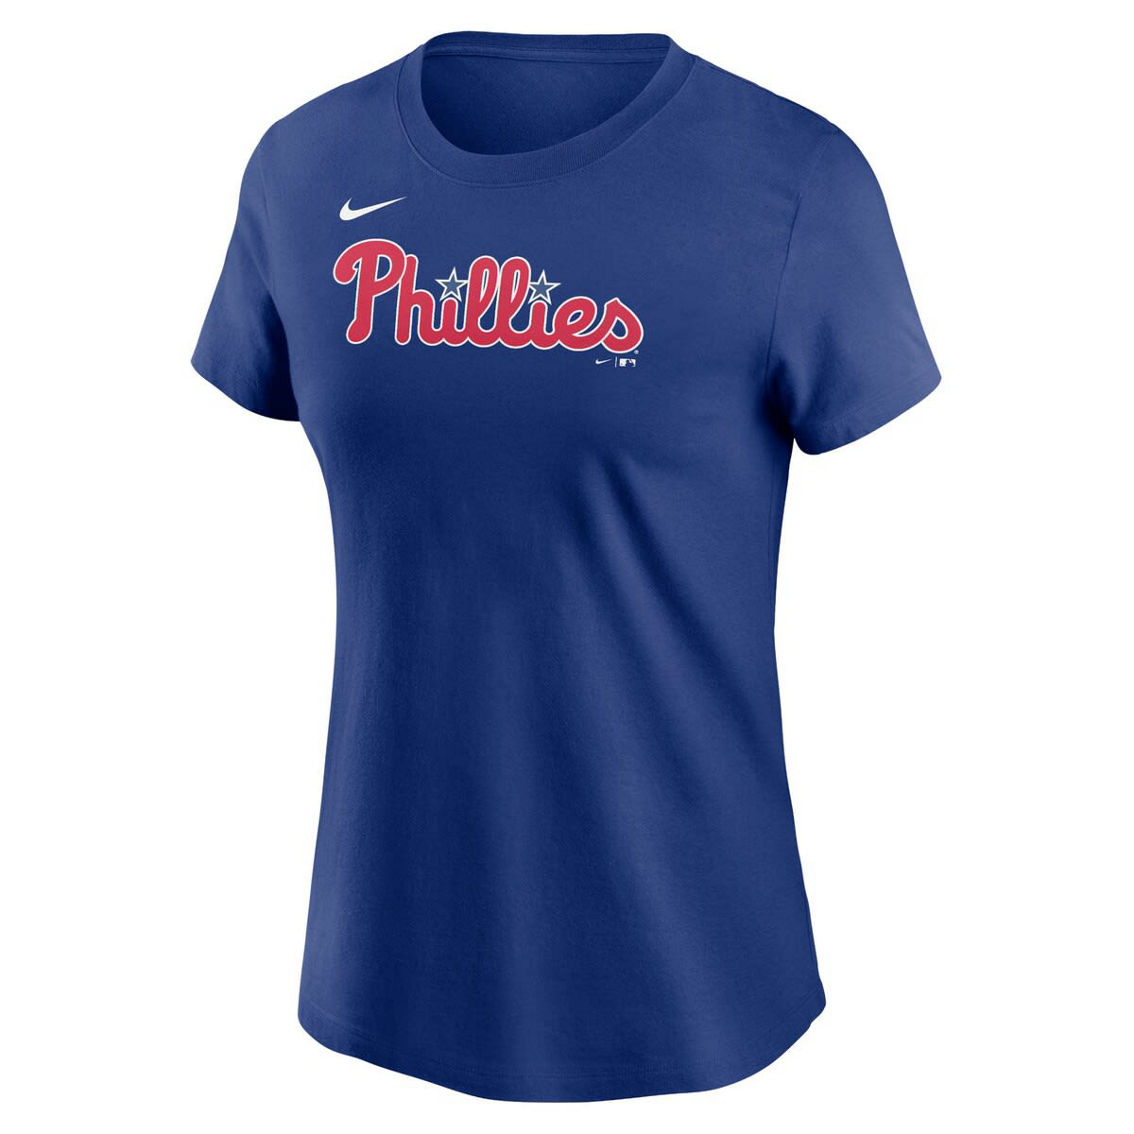 Nike Women's Royal Philadelphia Phillies Wordmark T-Shirt - Image 3 of 4